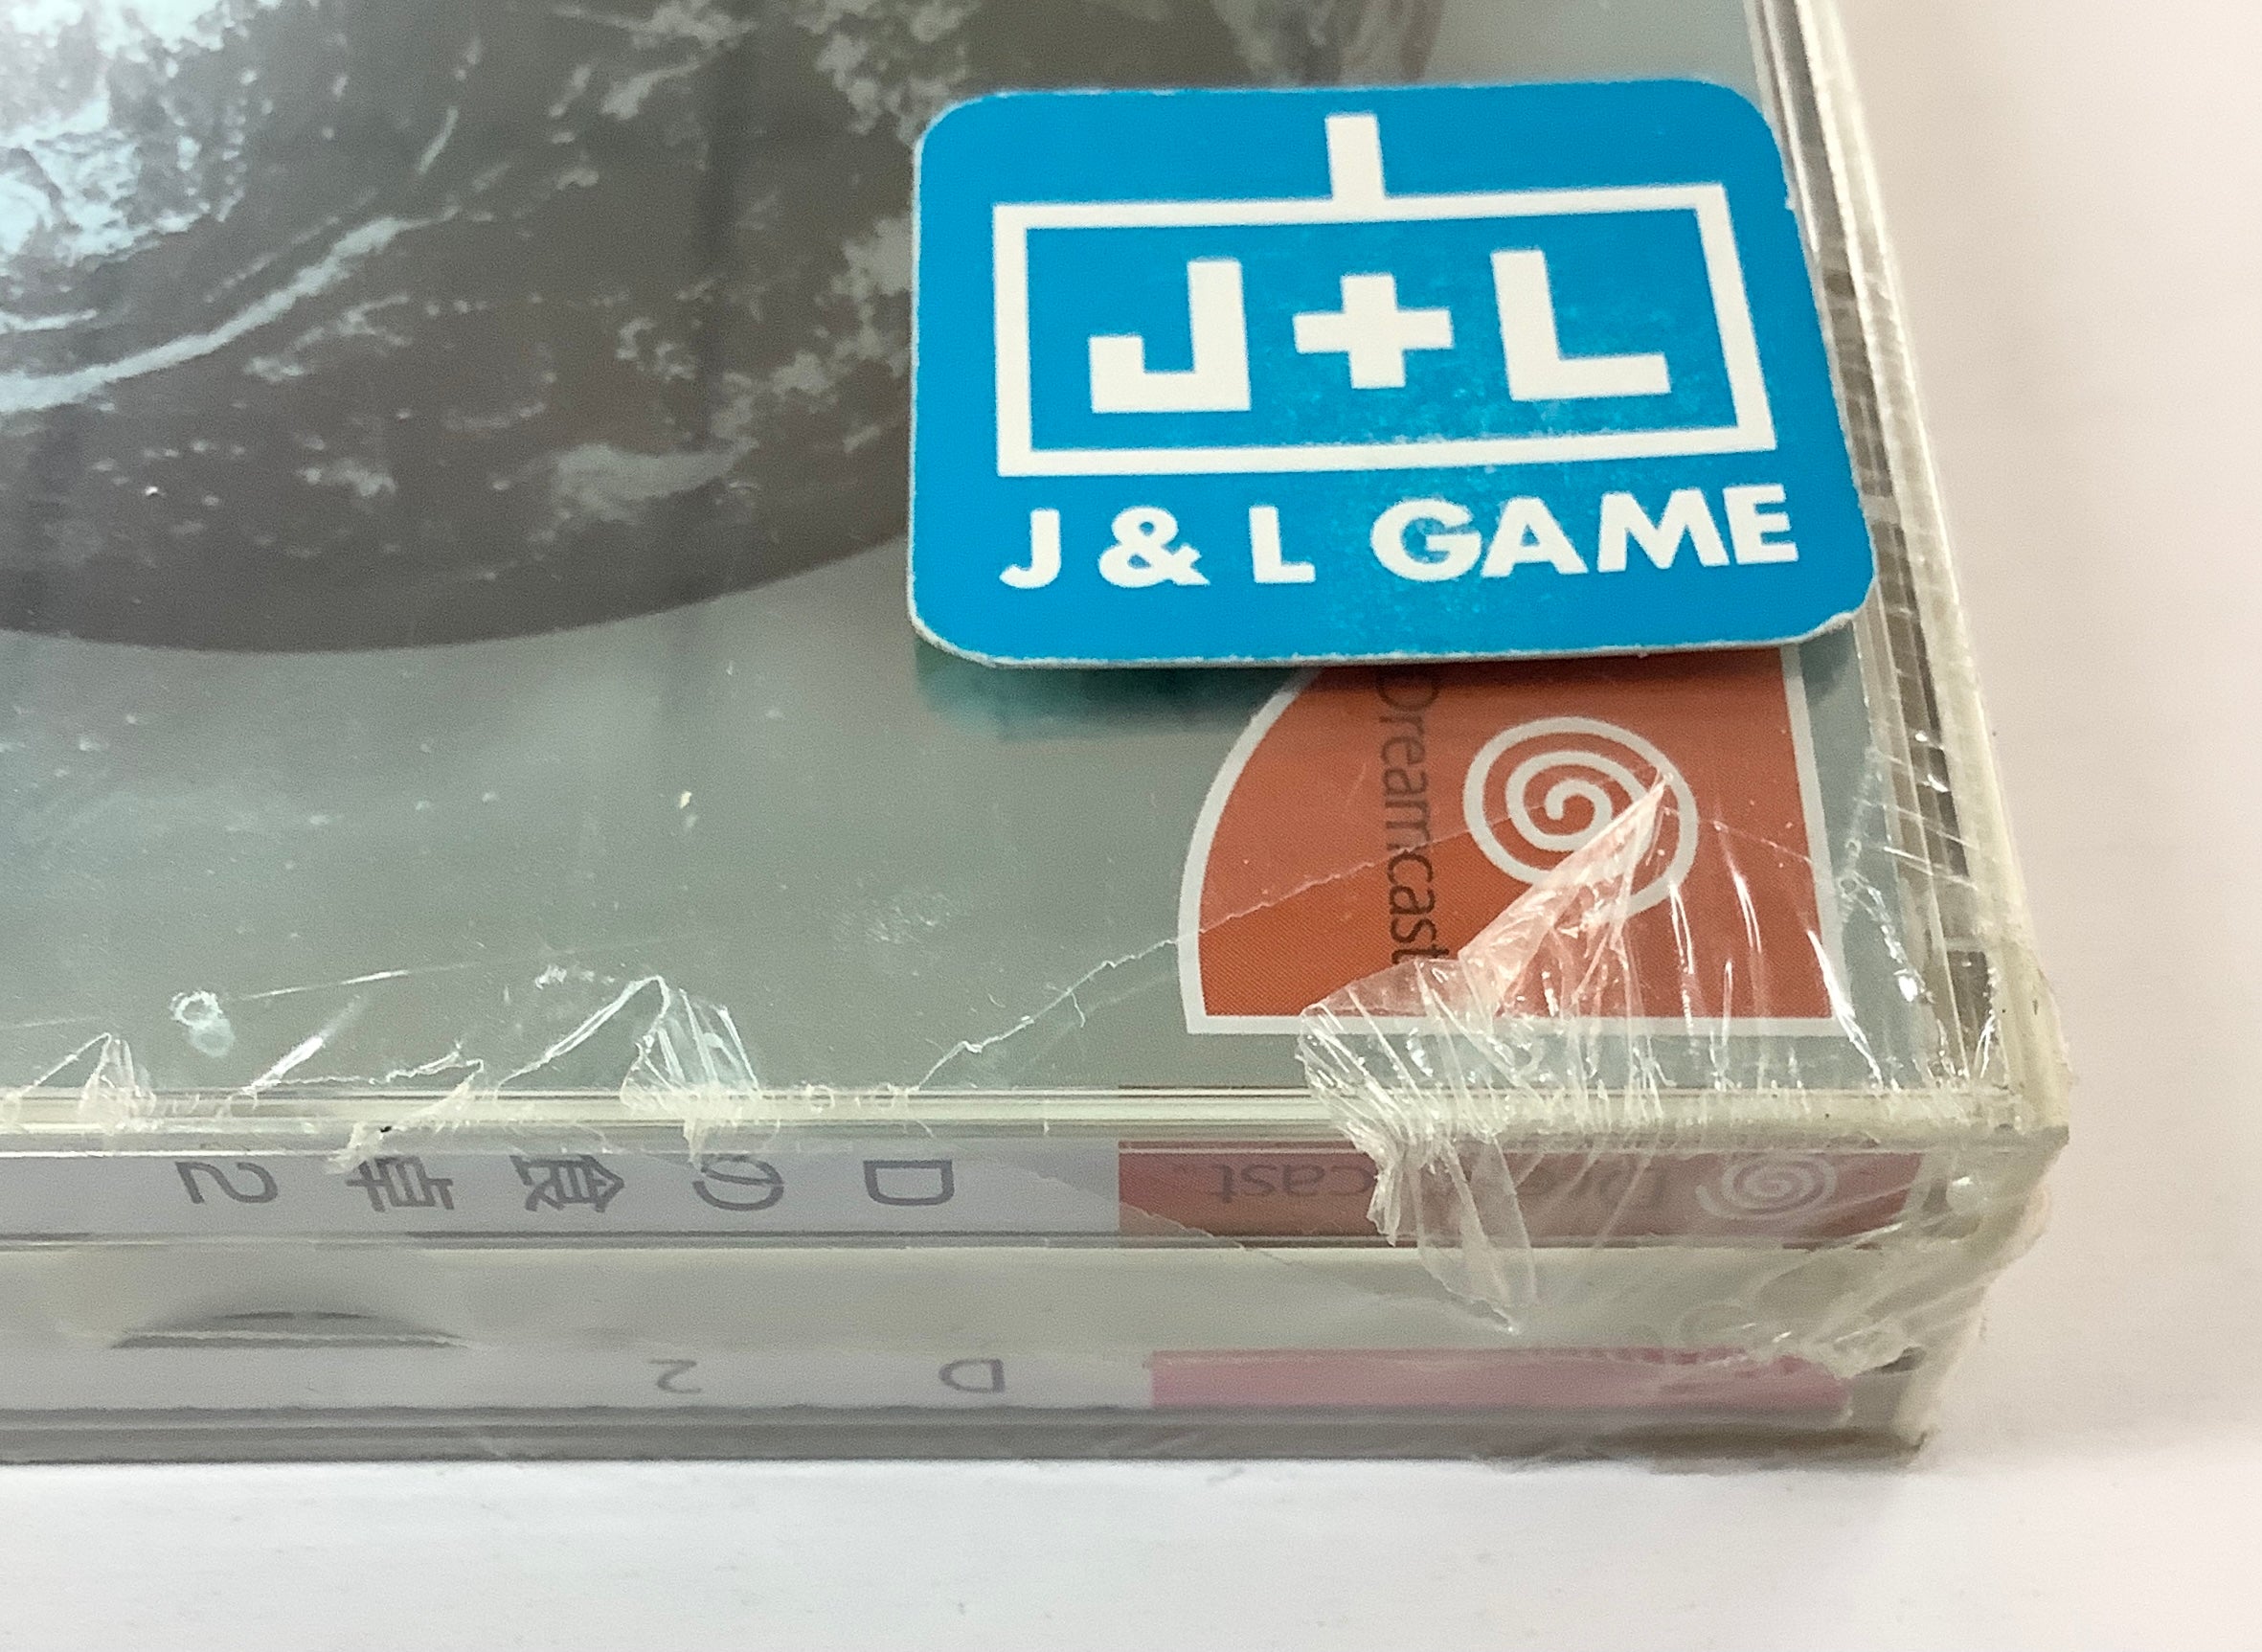 D no Shokutaku 2 (Bliss) - (DC) SEGA Dreamcast (Japanese Import) Video Games WARP   